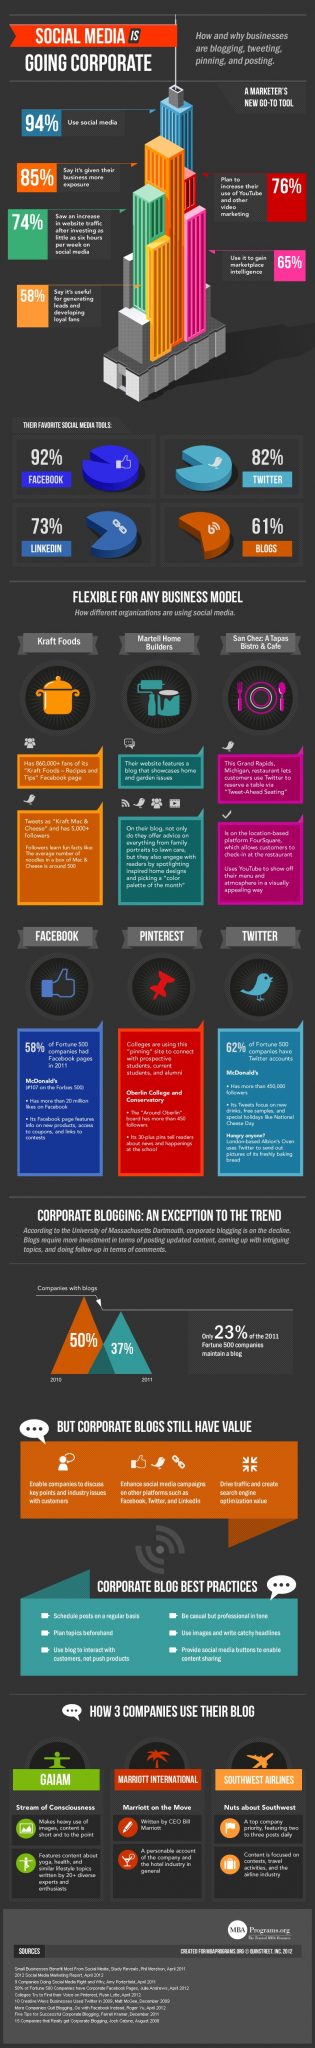 Social Media Corporate Brand Strategy 